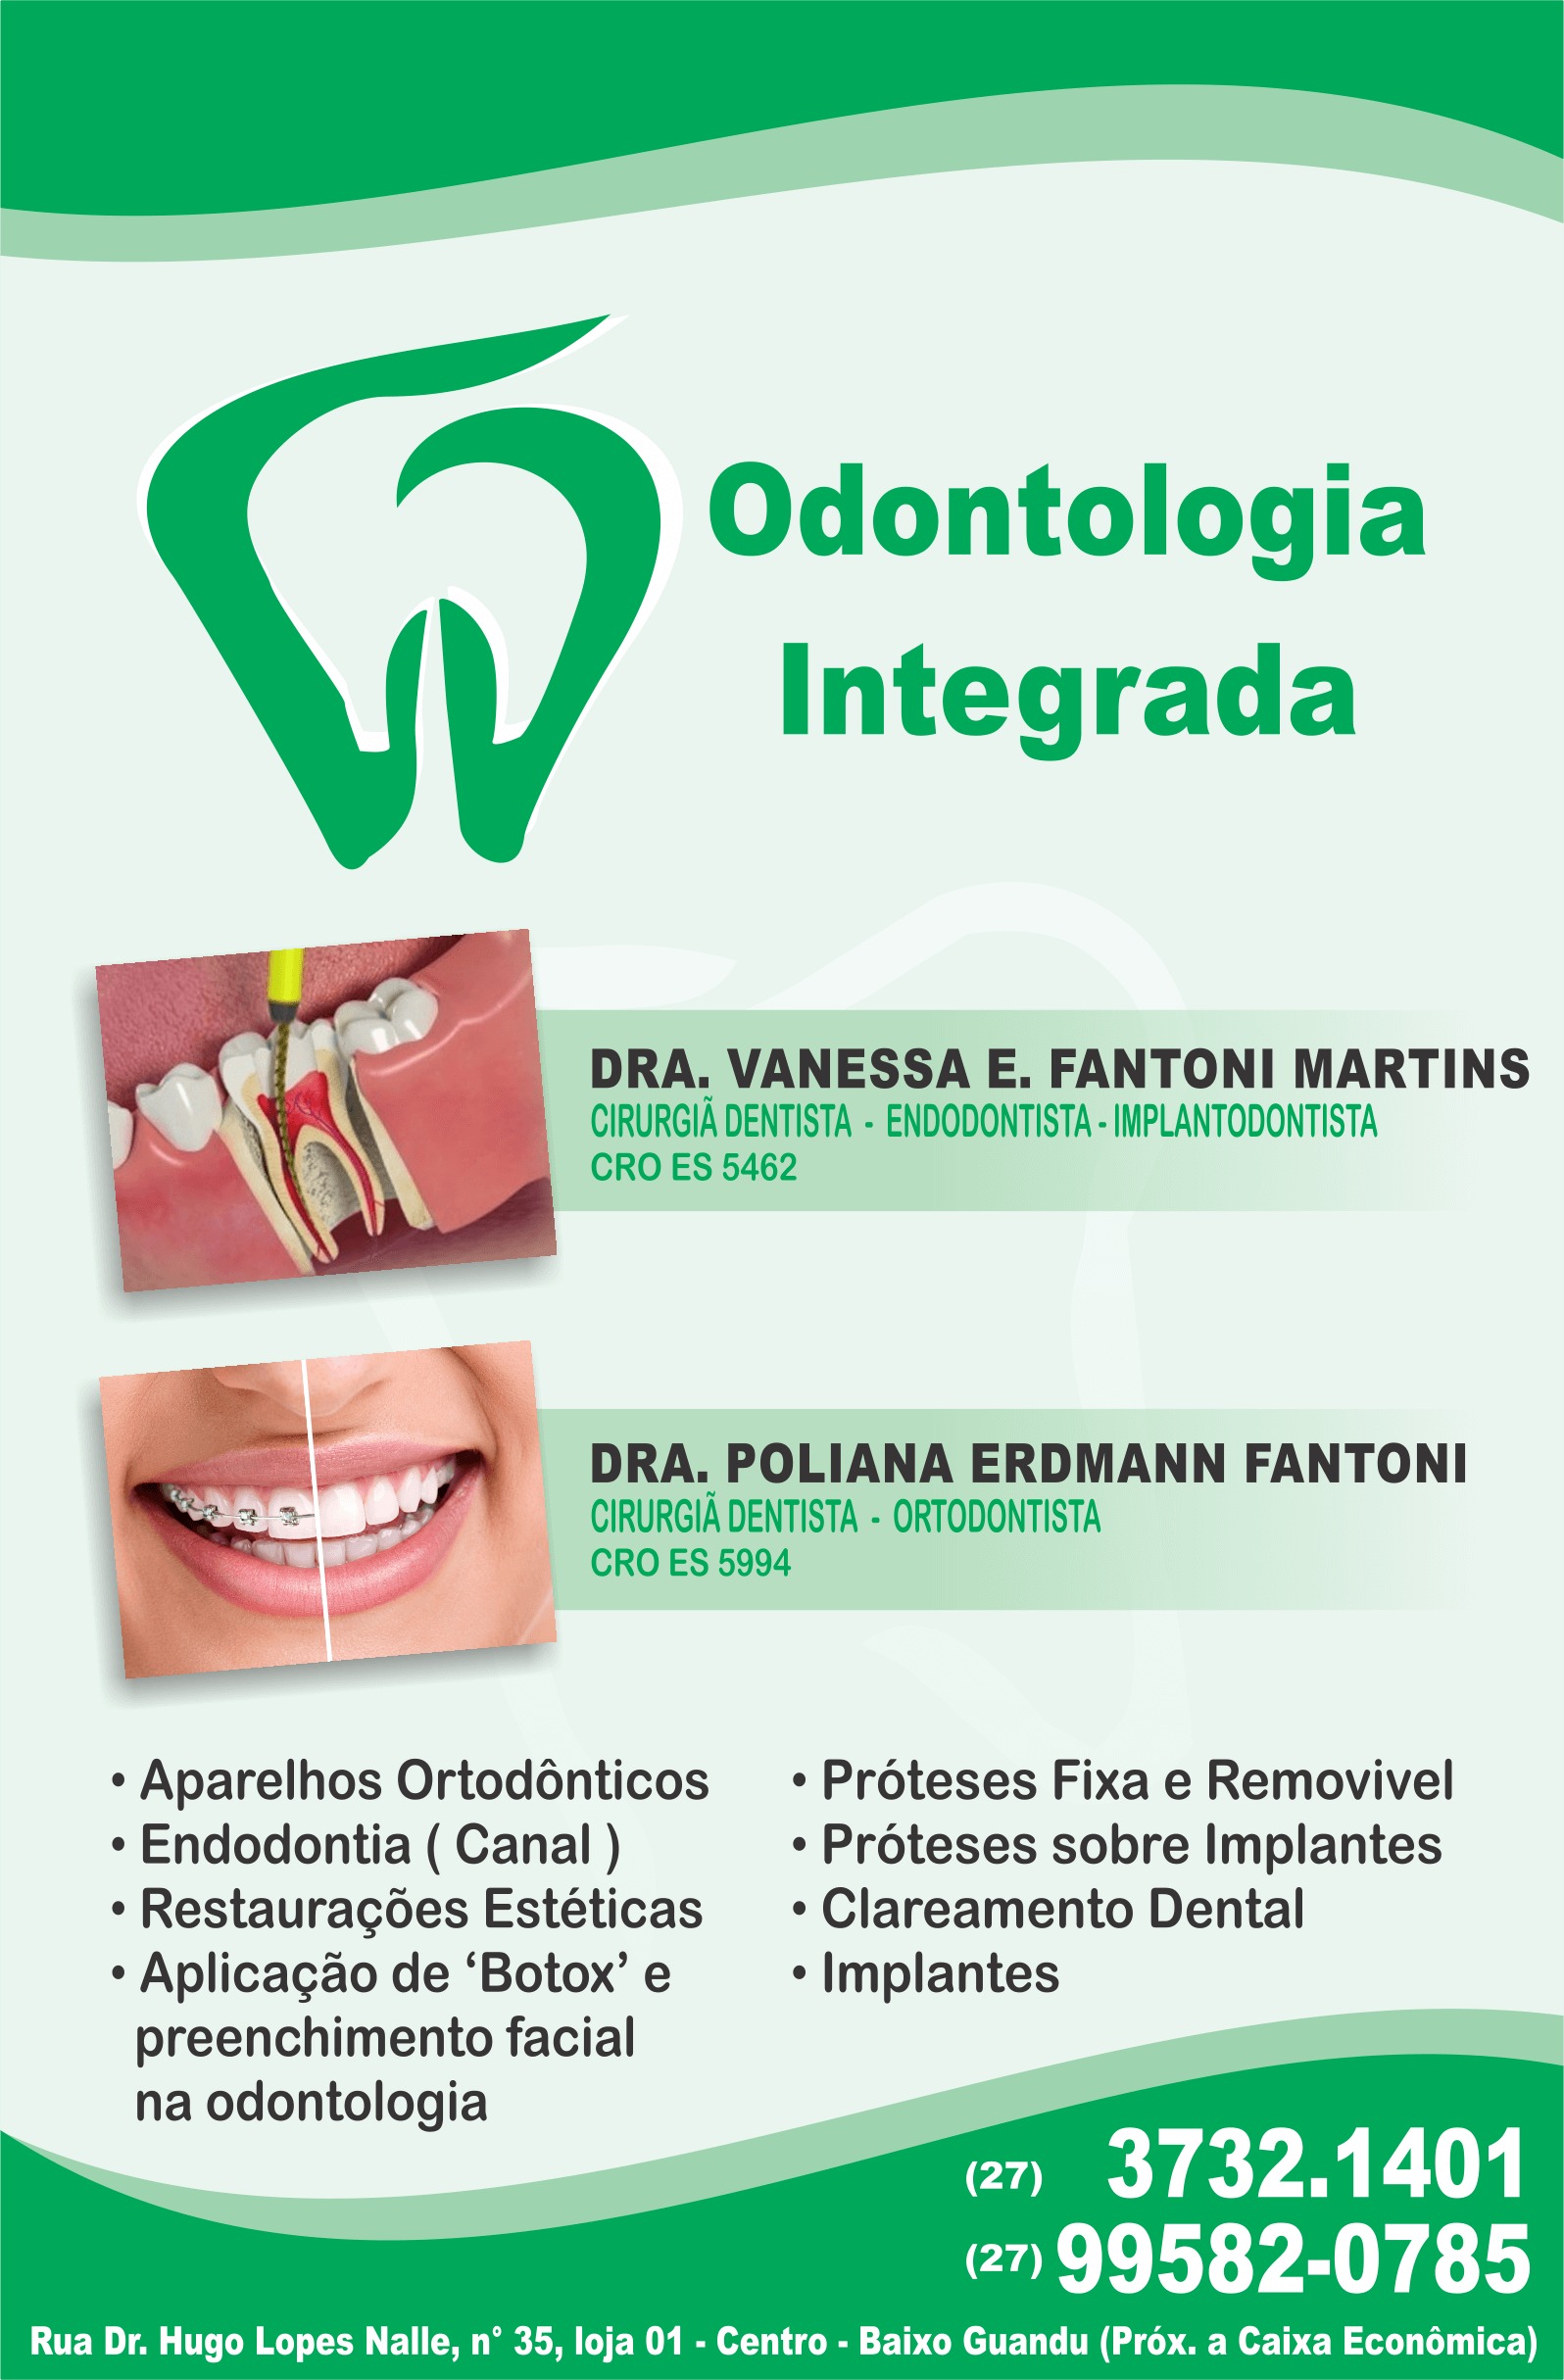 Odontologia Integrada